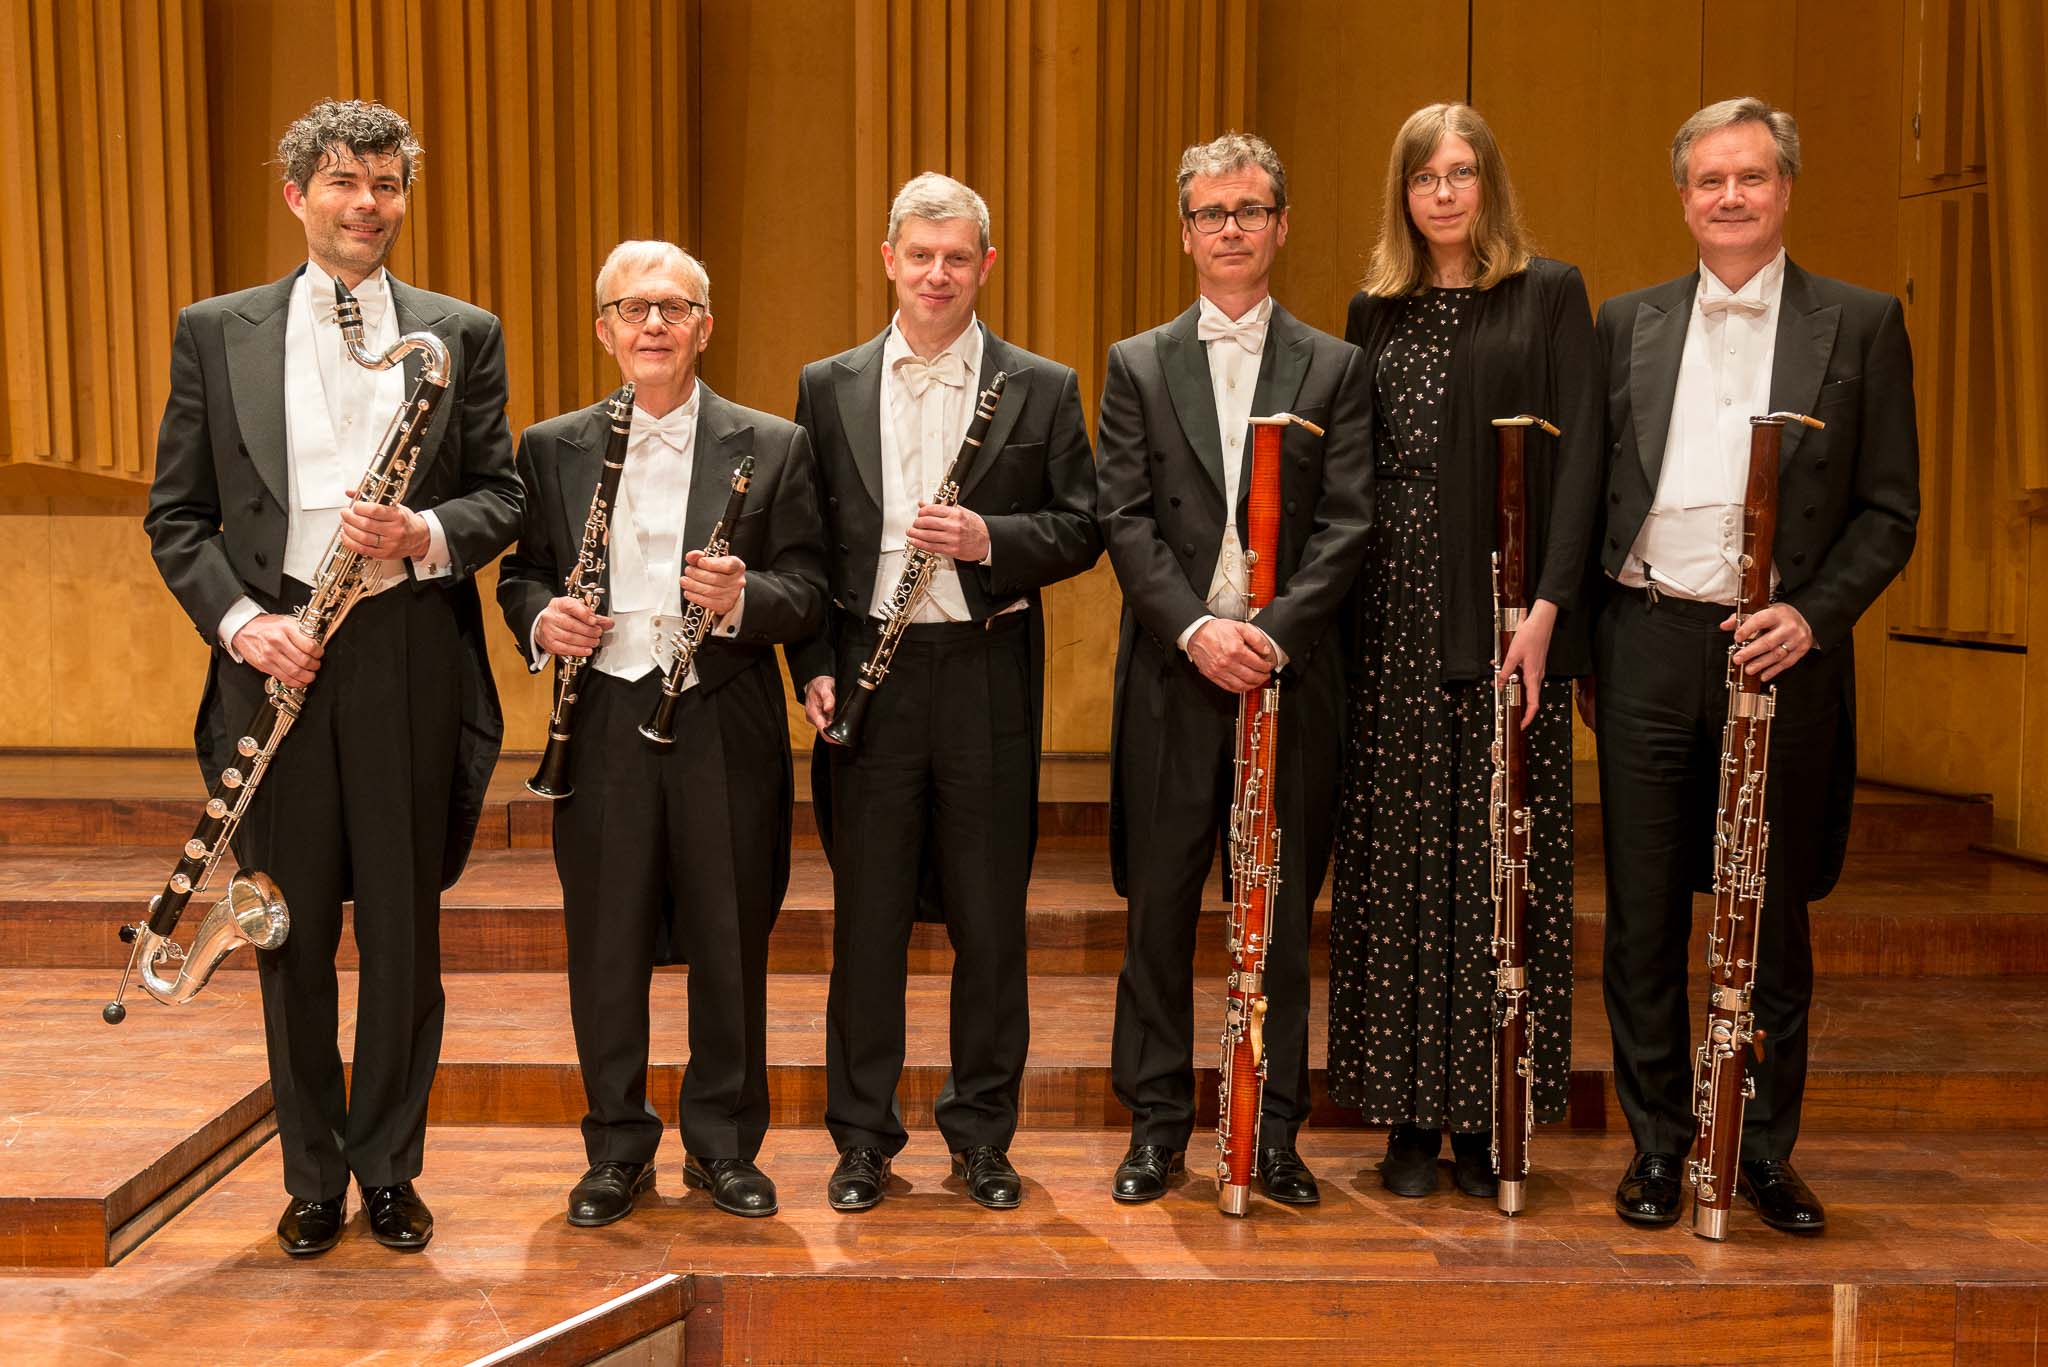 Kjetil Falkenberg Hansen, Claes Dahlqvist and Stefan Nilsson holding clarinets. Amanda Kann, Adam Nyqvist and Gunnar Hellquist are holding bassoons.